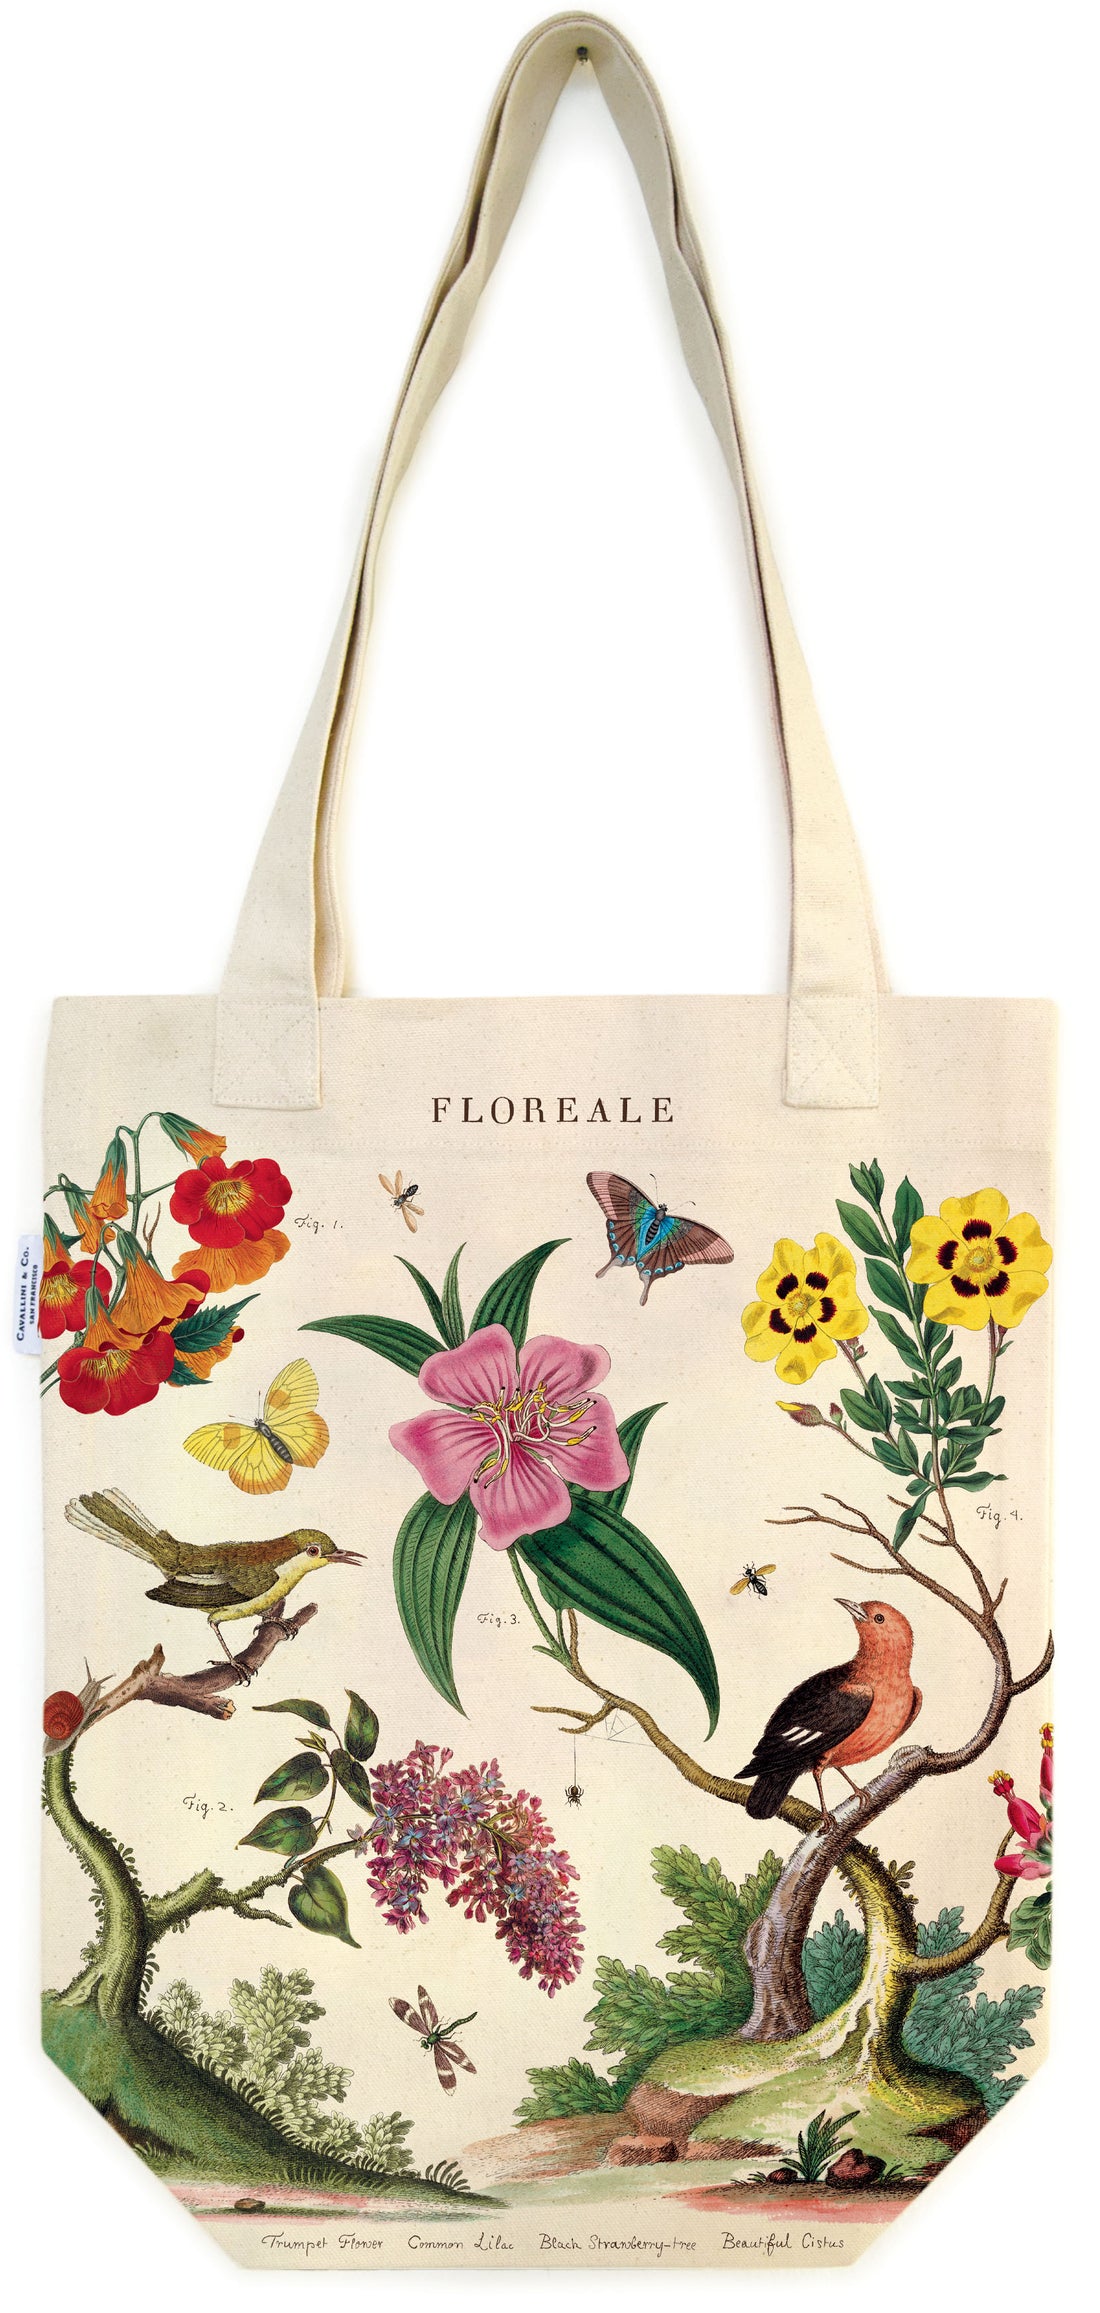 Floreale Tote Bag